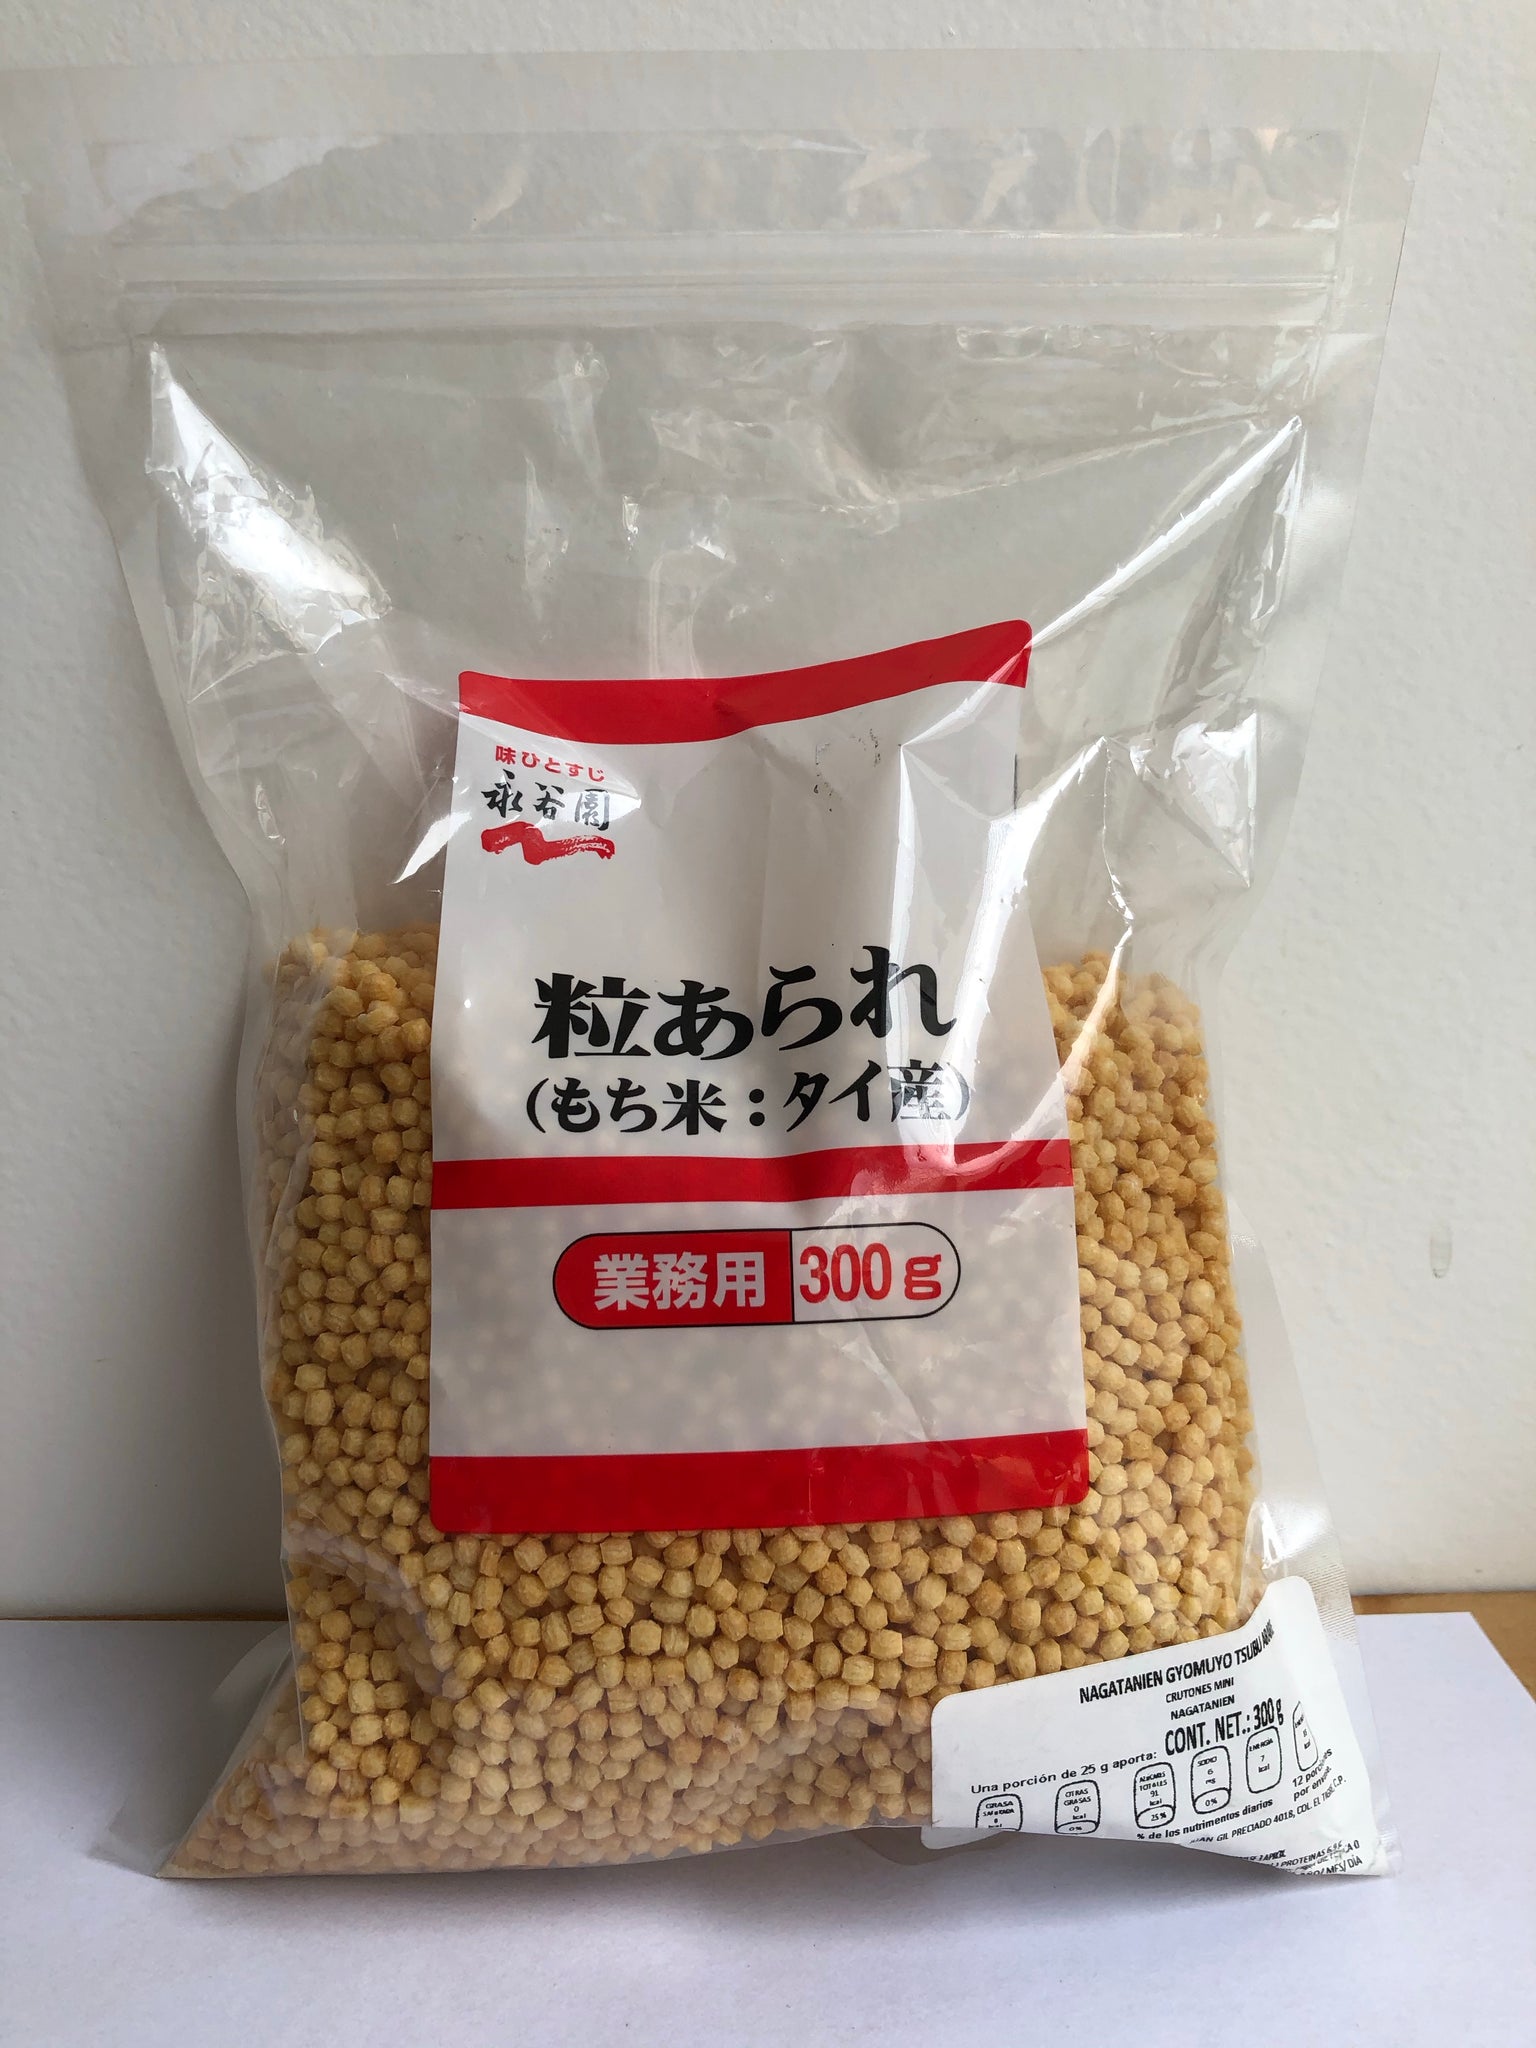 Tsubu arare topping 300 gramos (arroz crujiente)